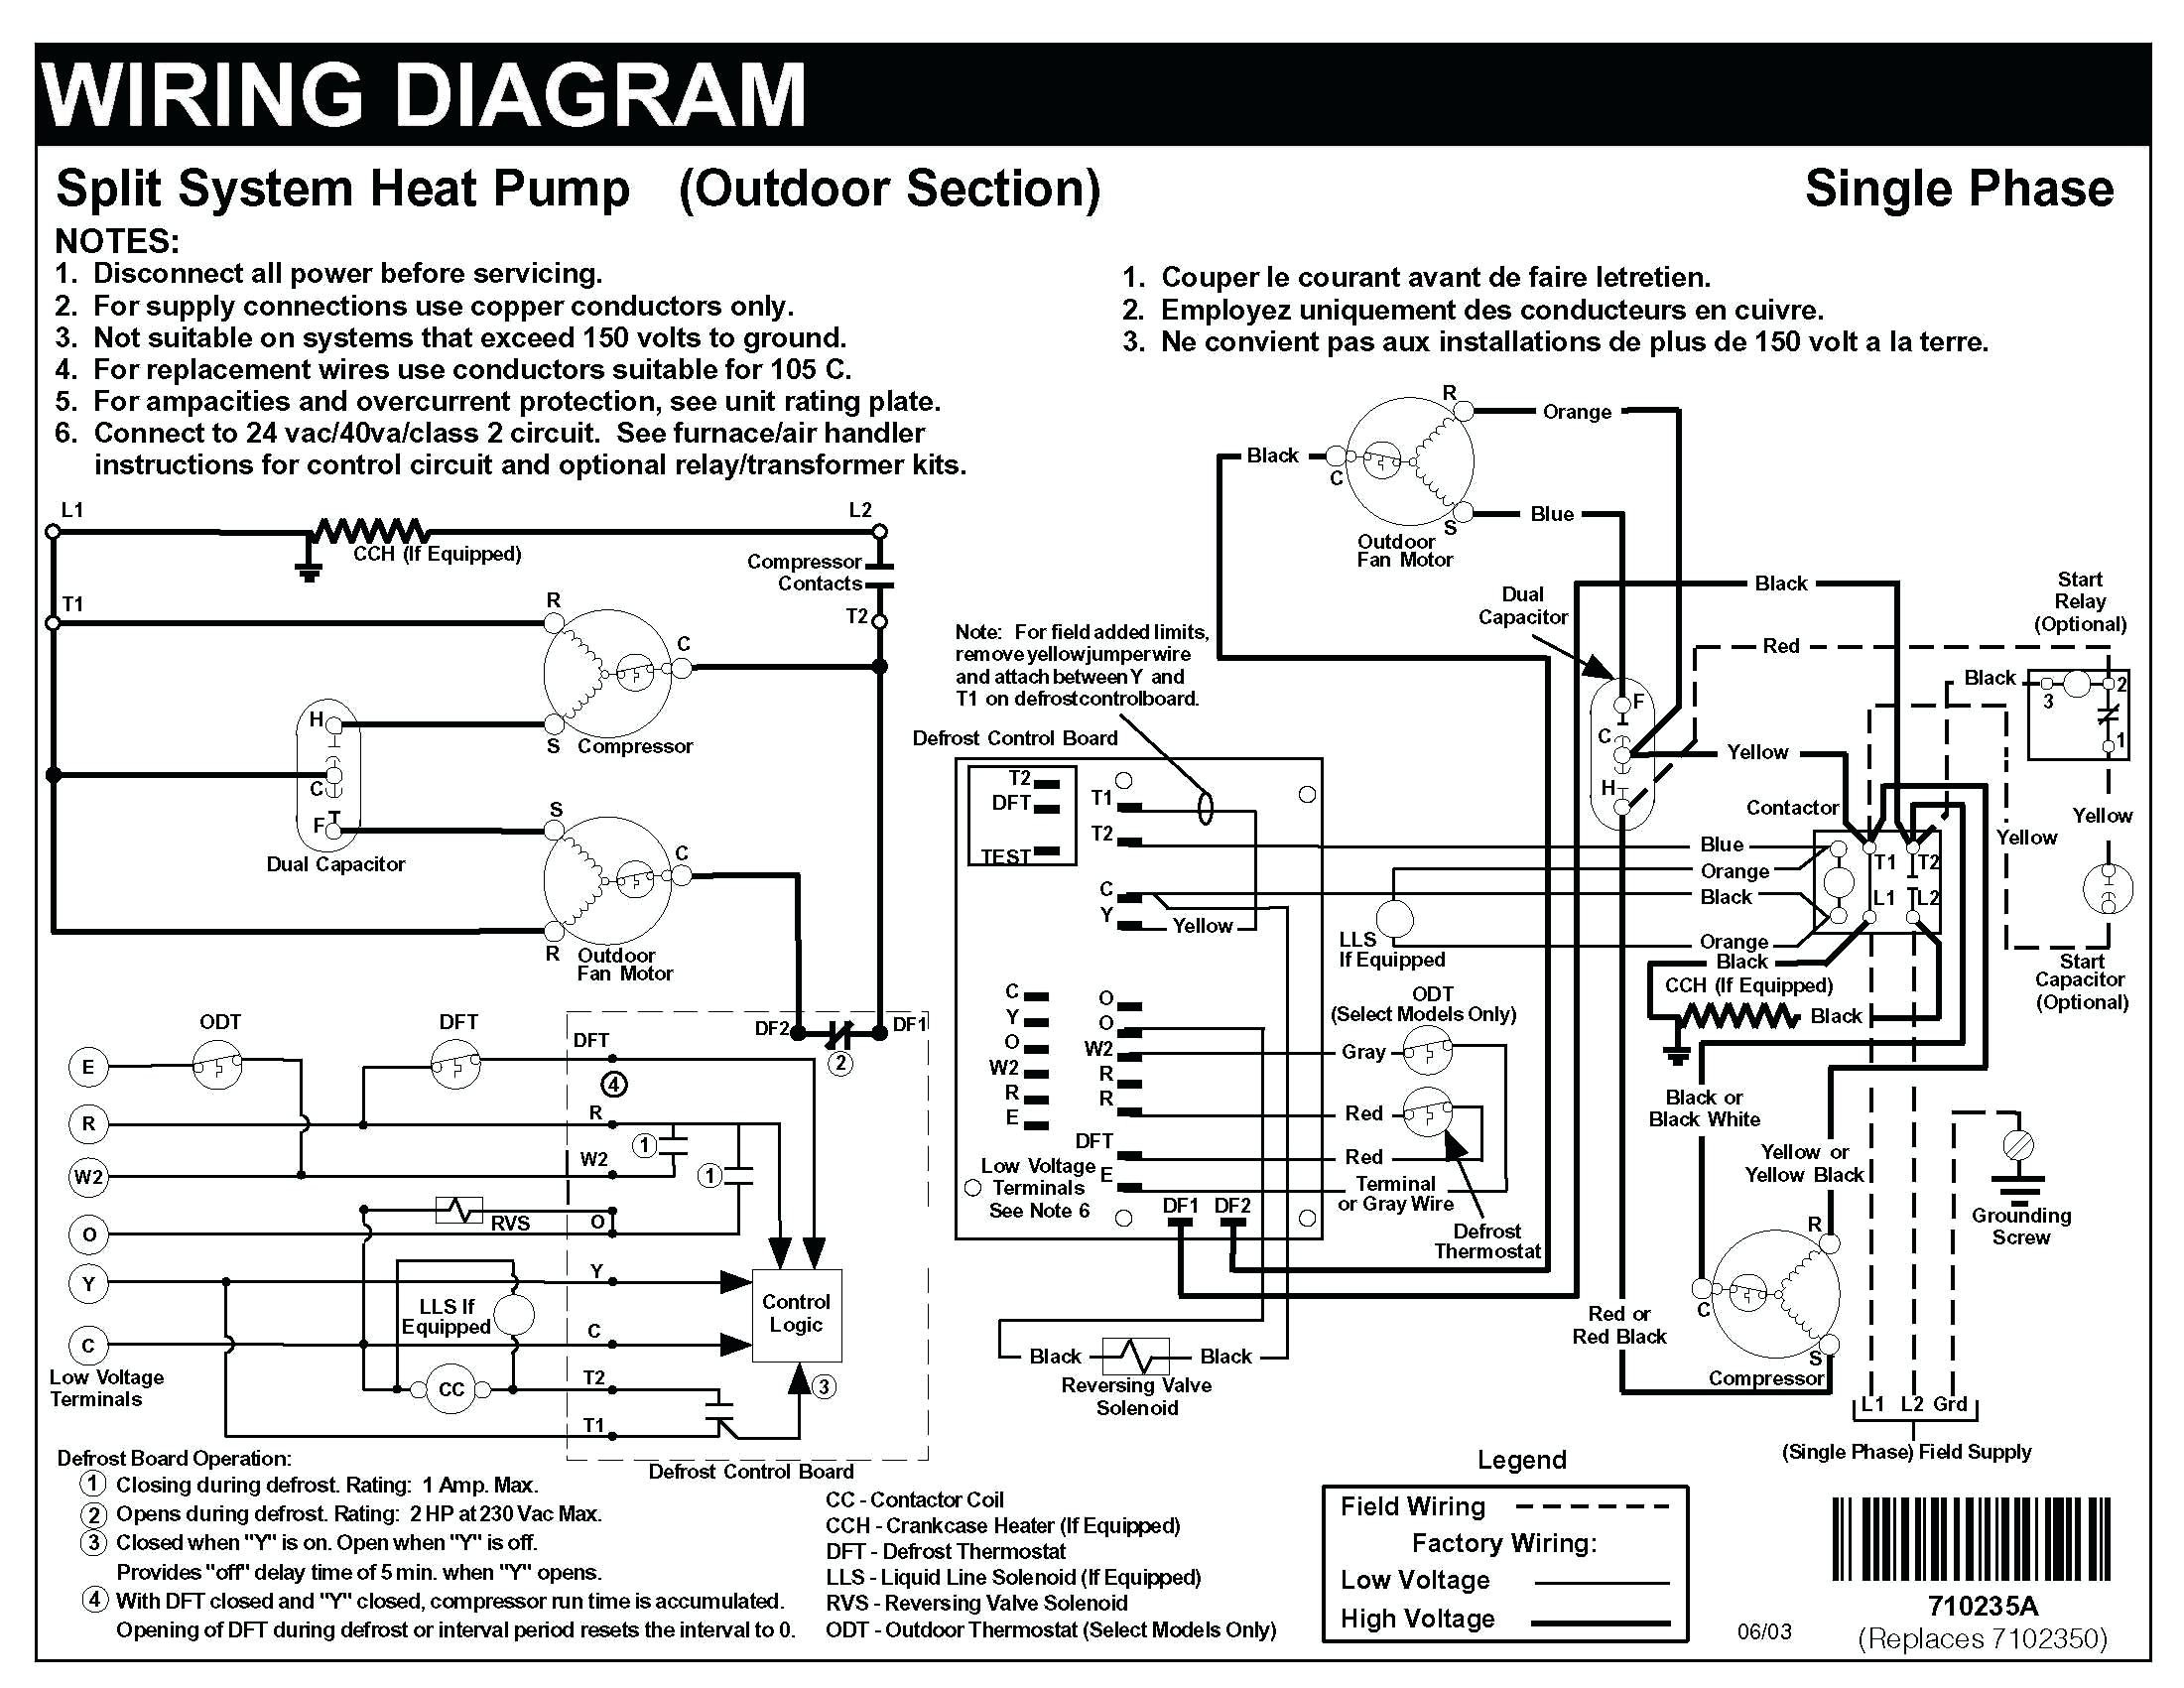 Mitchell Automotive Wiring Diagrams Mitchell Wiring Diagrams 1 ford Mustang Radio Diagram Car Autos Of Mitchell Automotive Wiring Diagrams